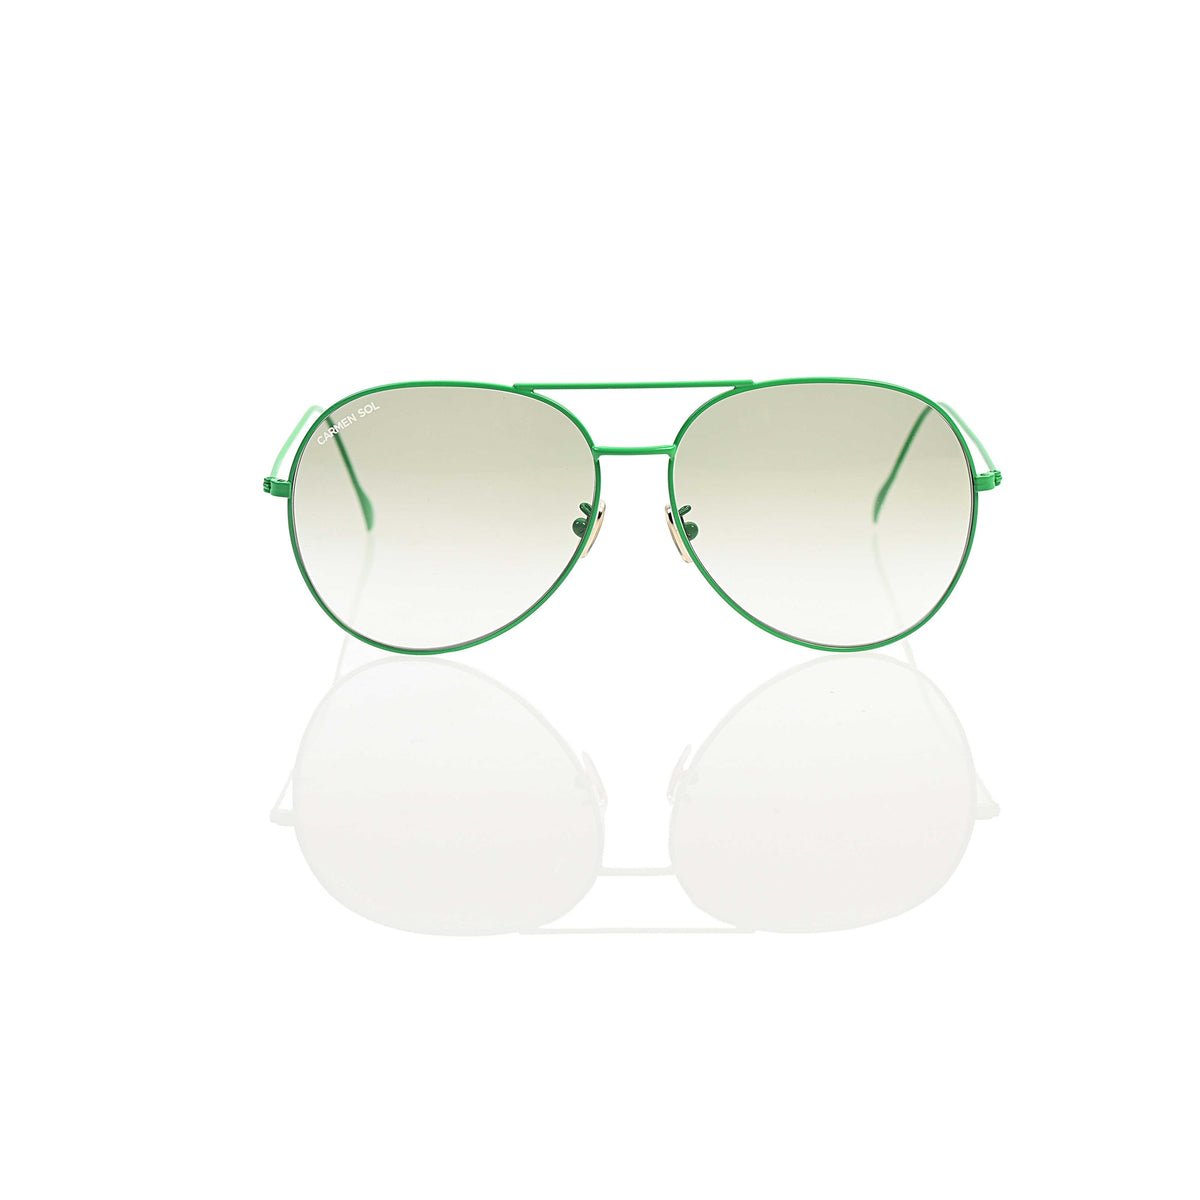 Carmen sol aviator sunglasses for beach lovers, green sunglasses.